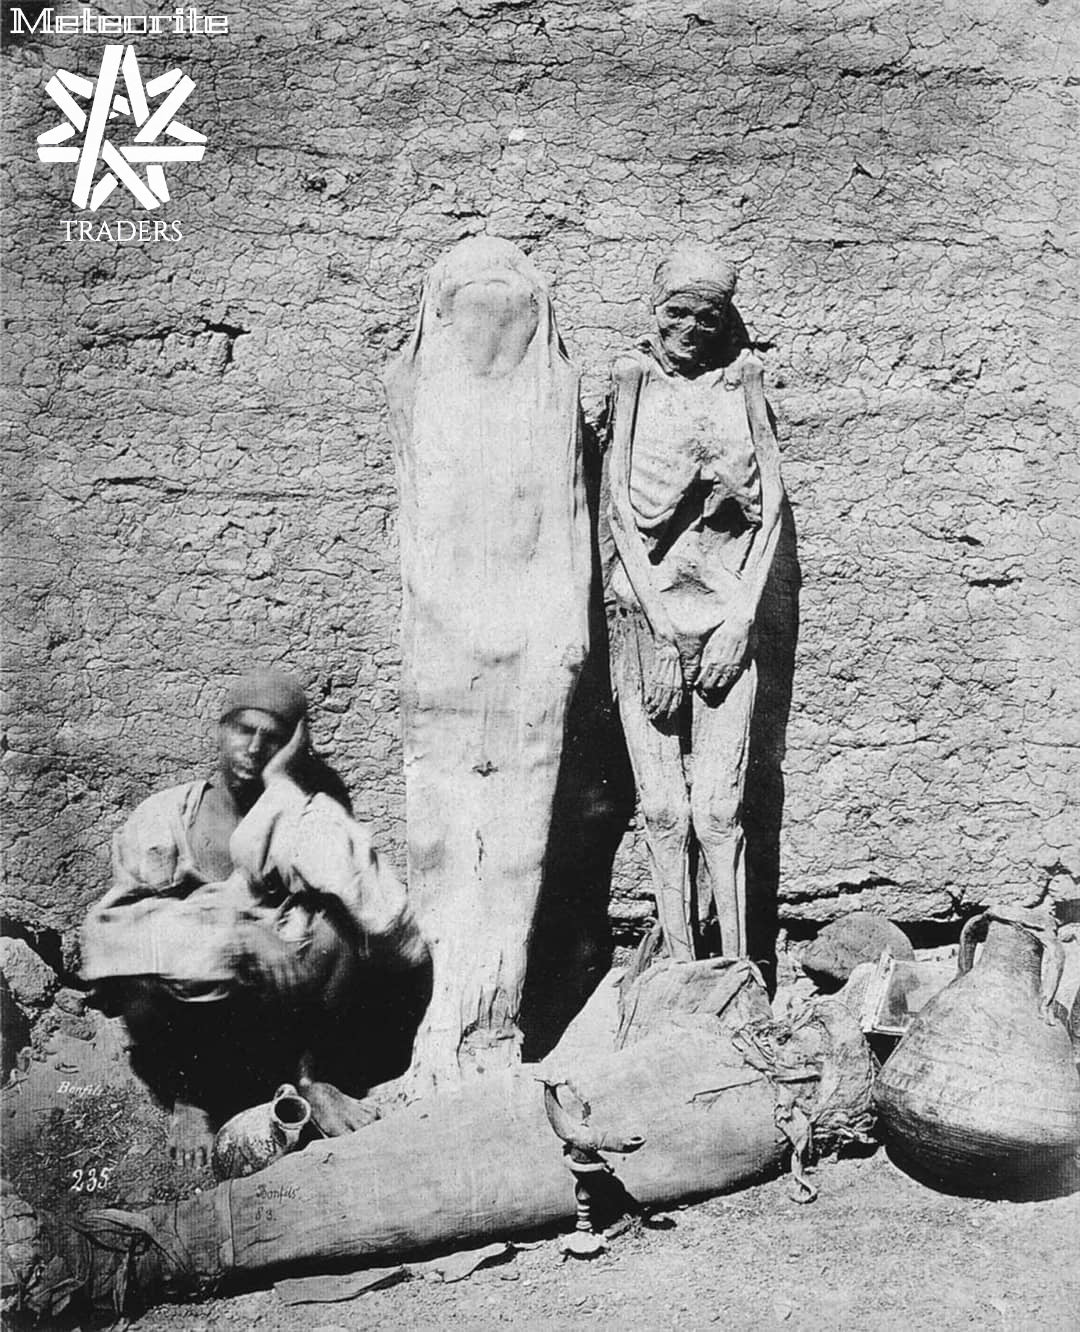 Street vendor selling mummies in Egypt, circa 1865.